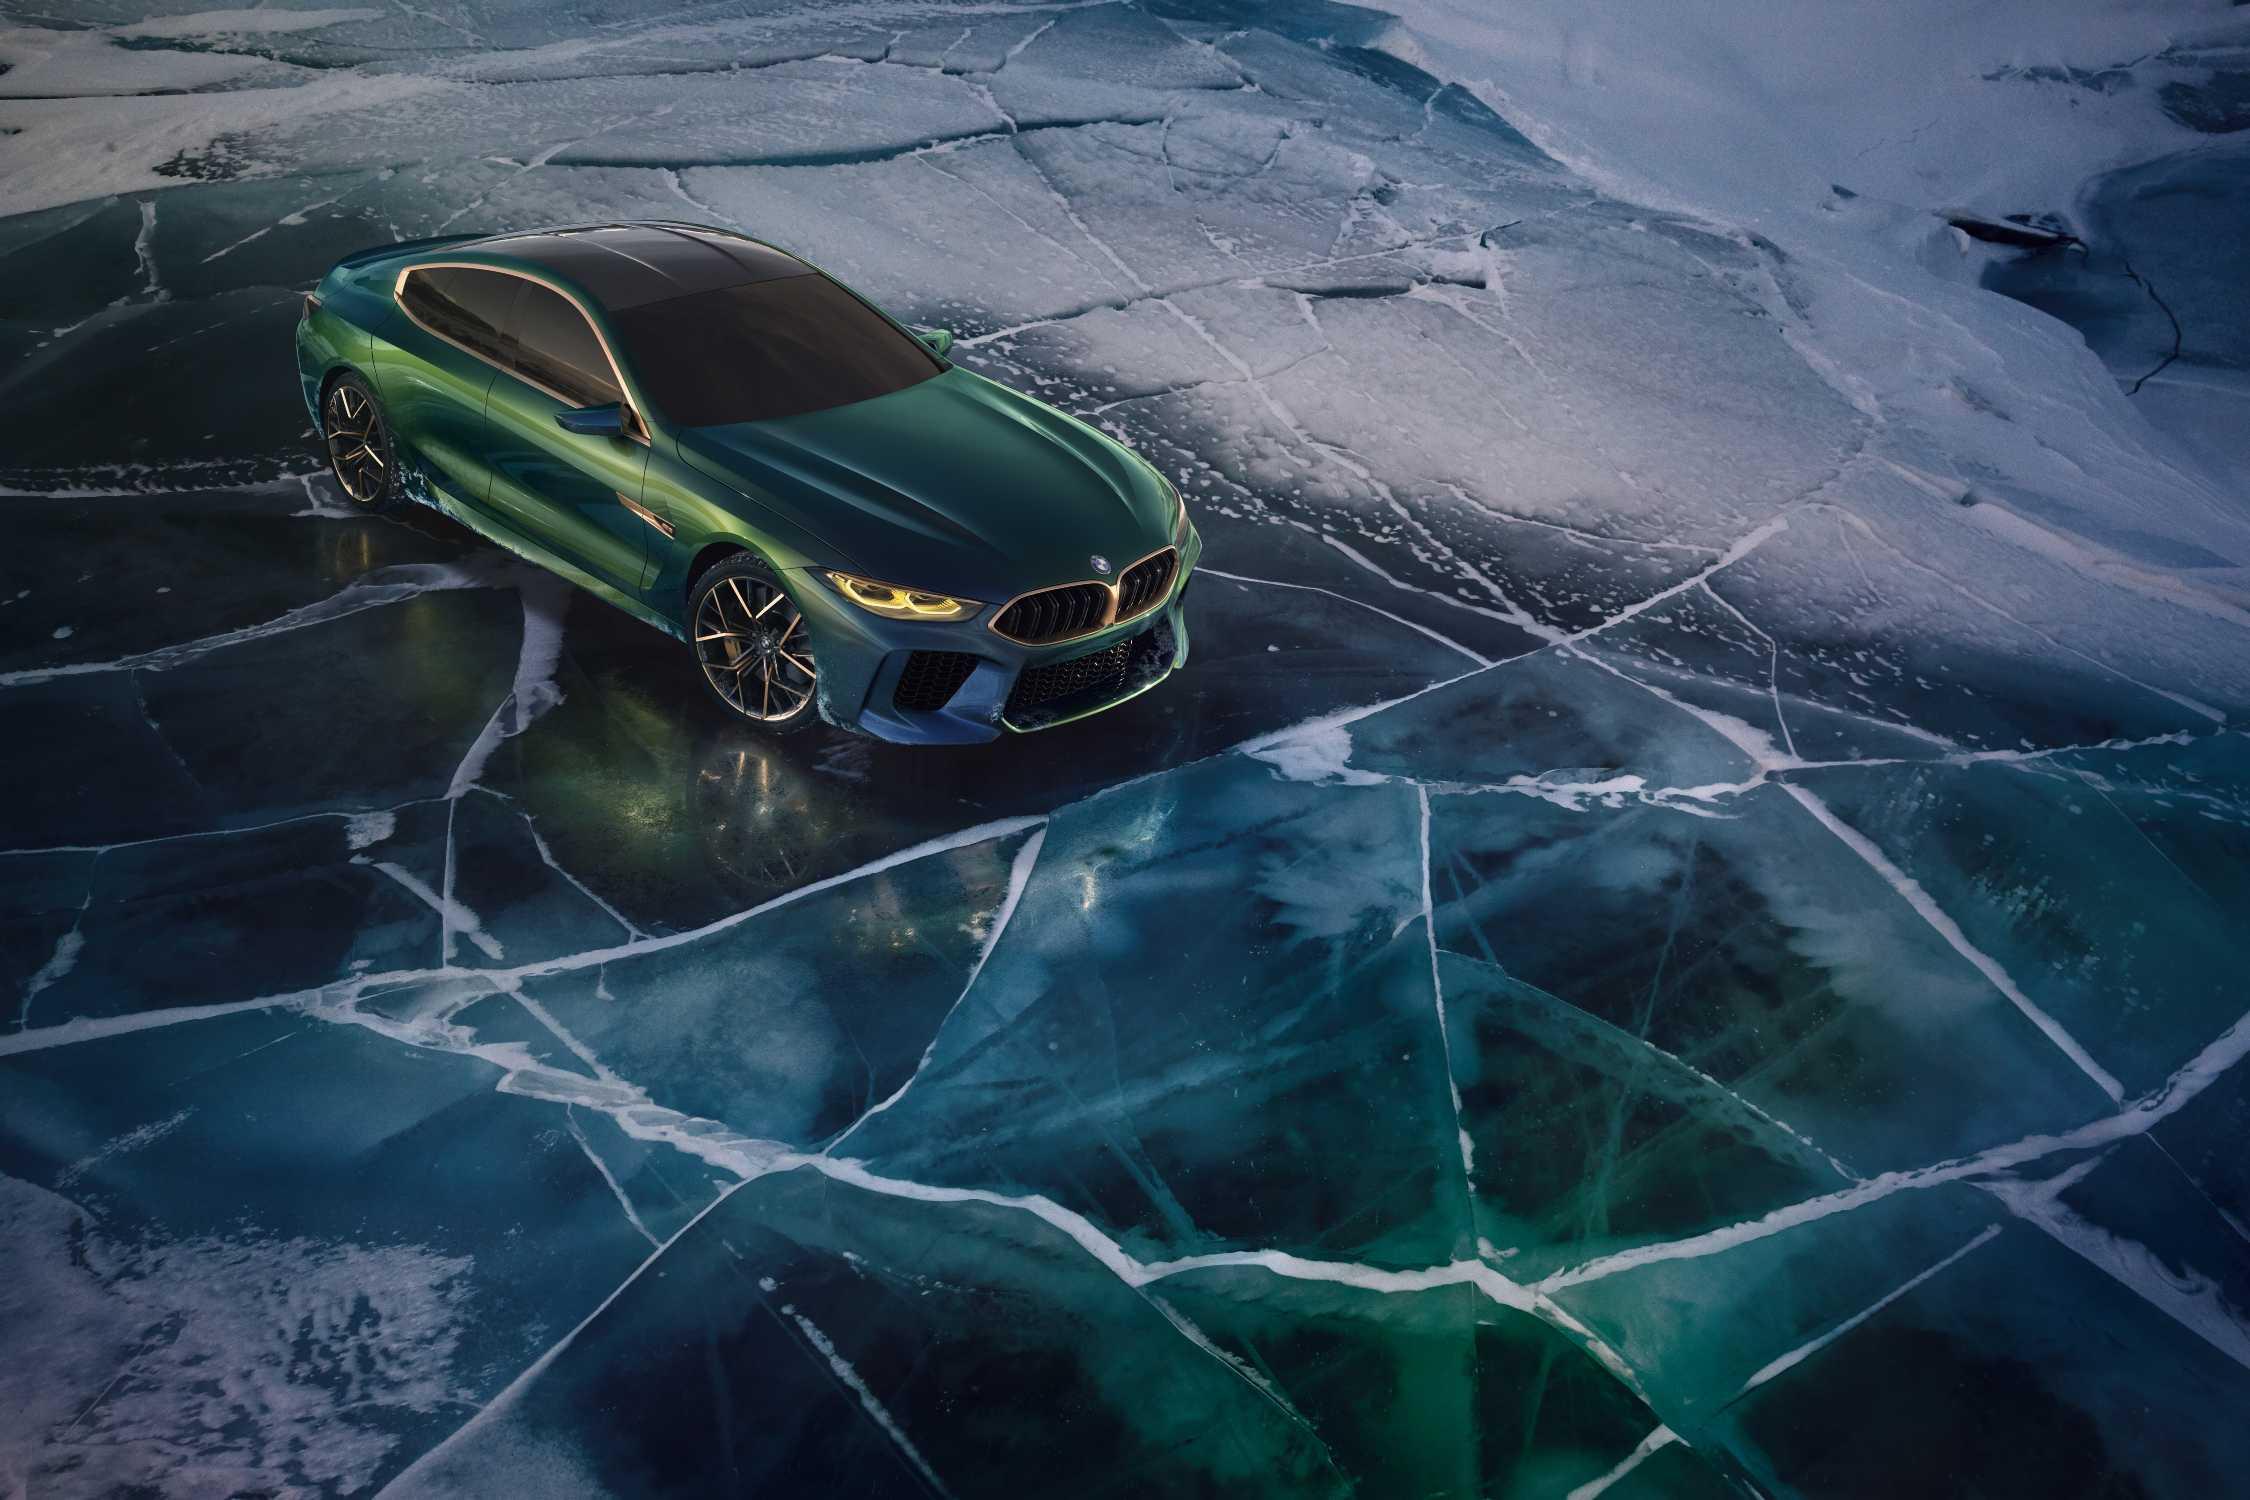 The BMW Concept M8 Gran Coupe showcases a new interpretation of